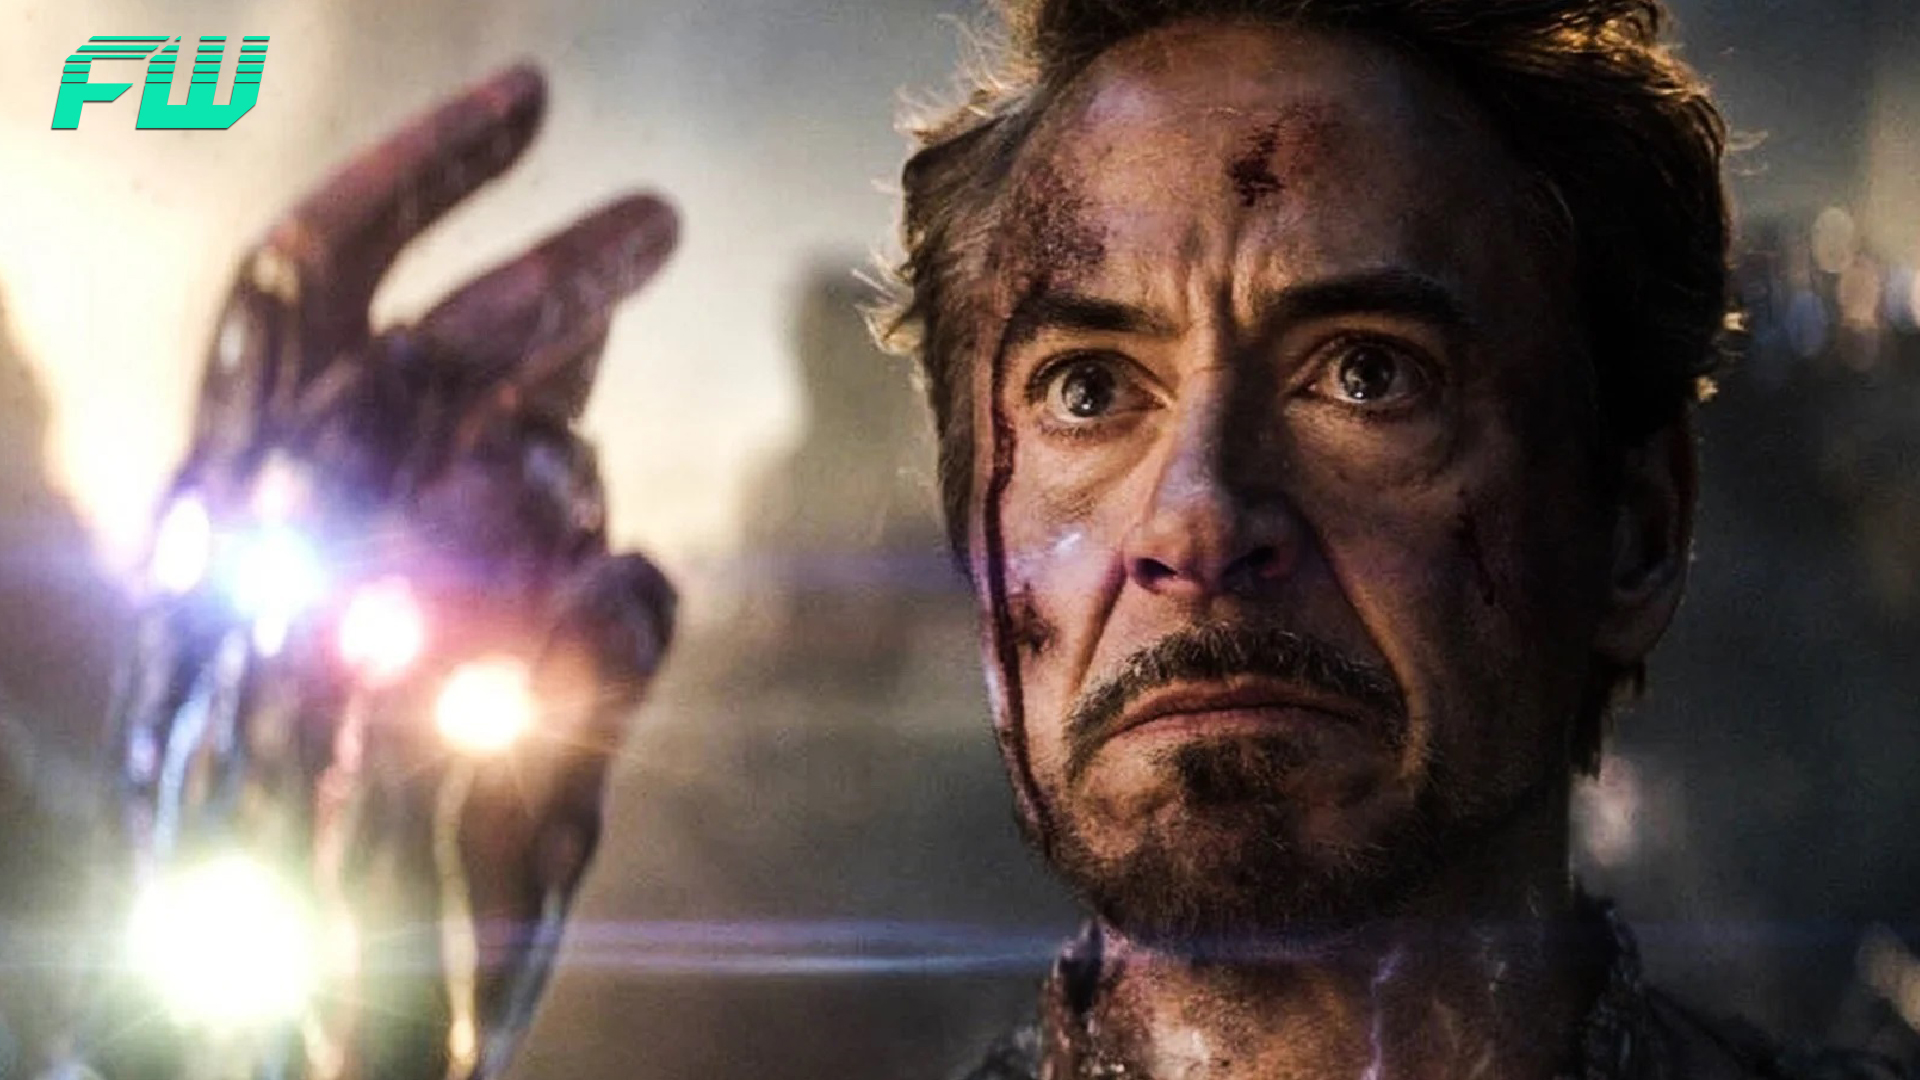 Avengers Endgame Directors Share I Am Iron Man Theater Reaction Video